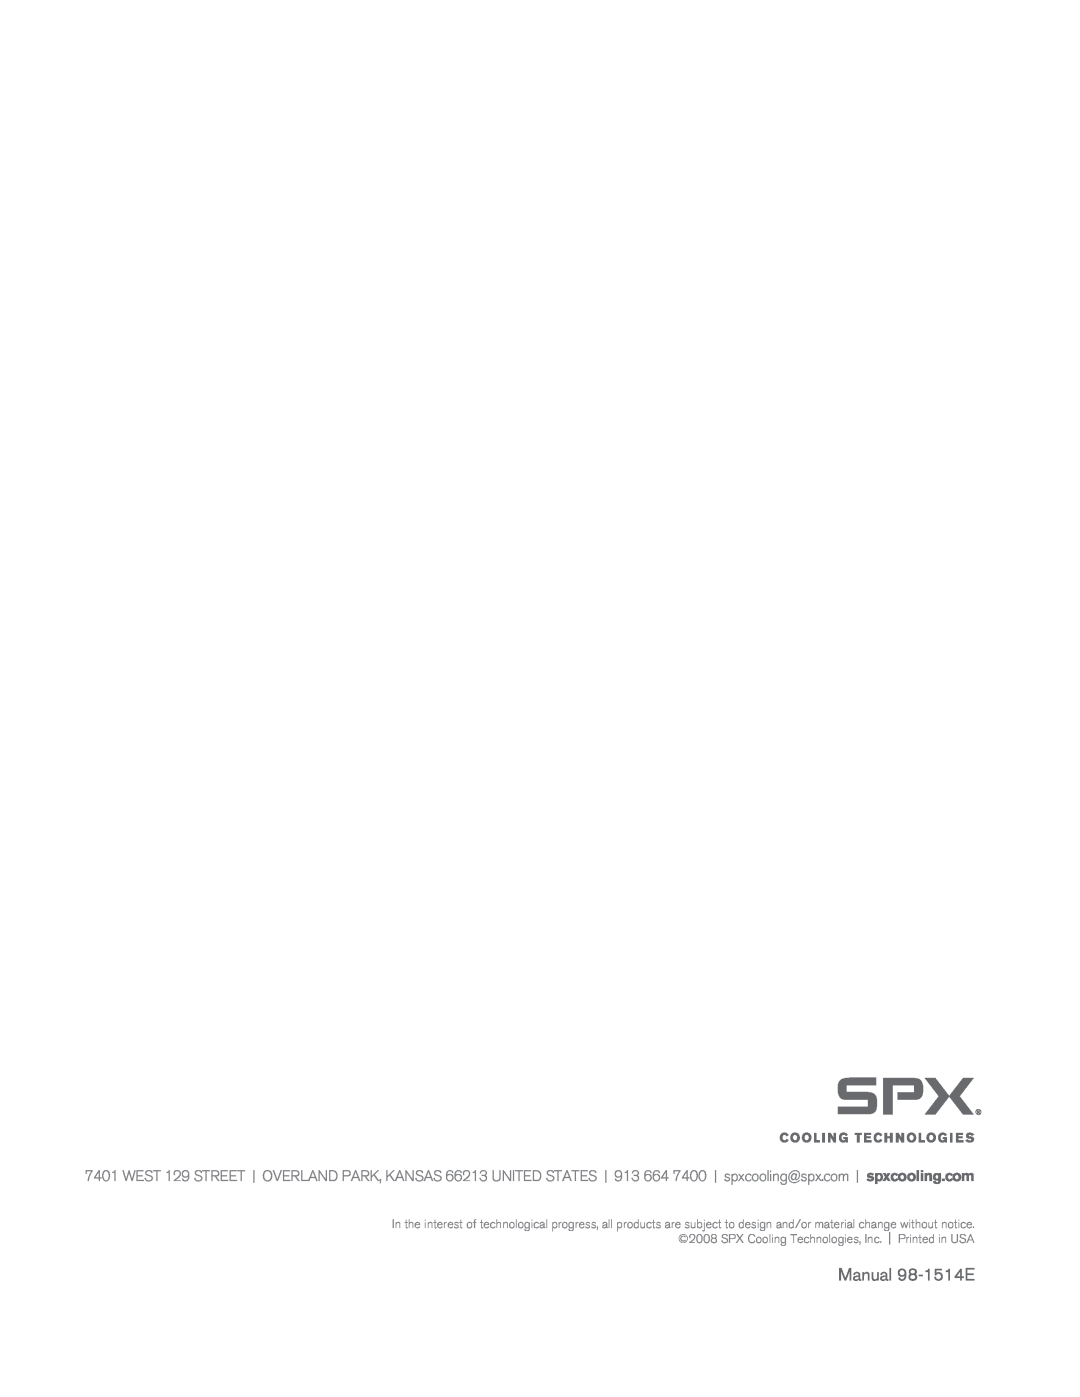 SPX Cooling Technologies user manual Manual 98-1514E 